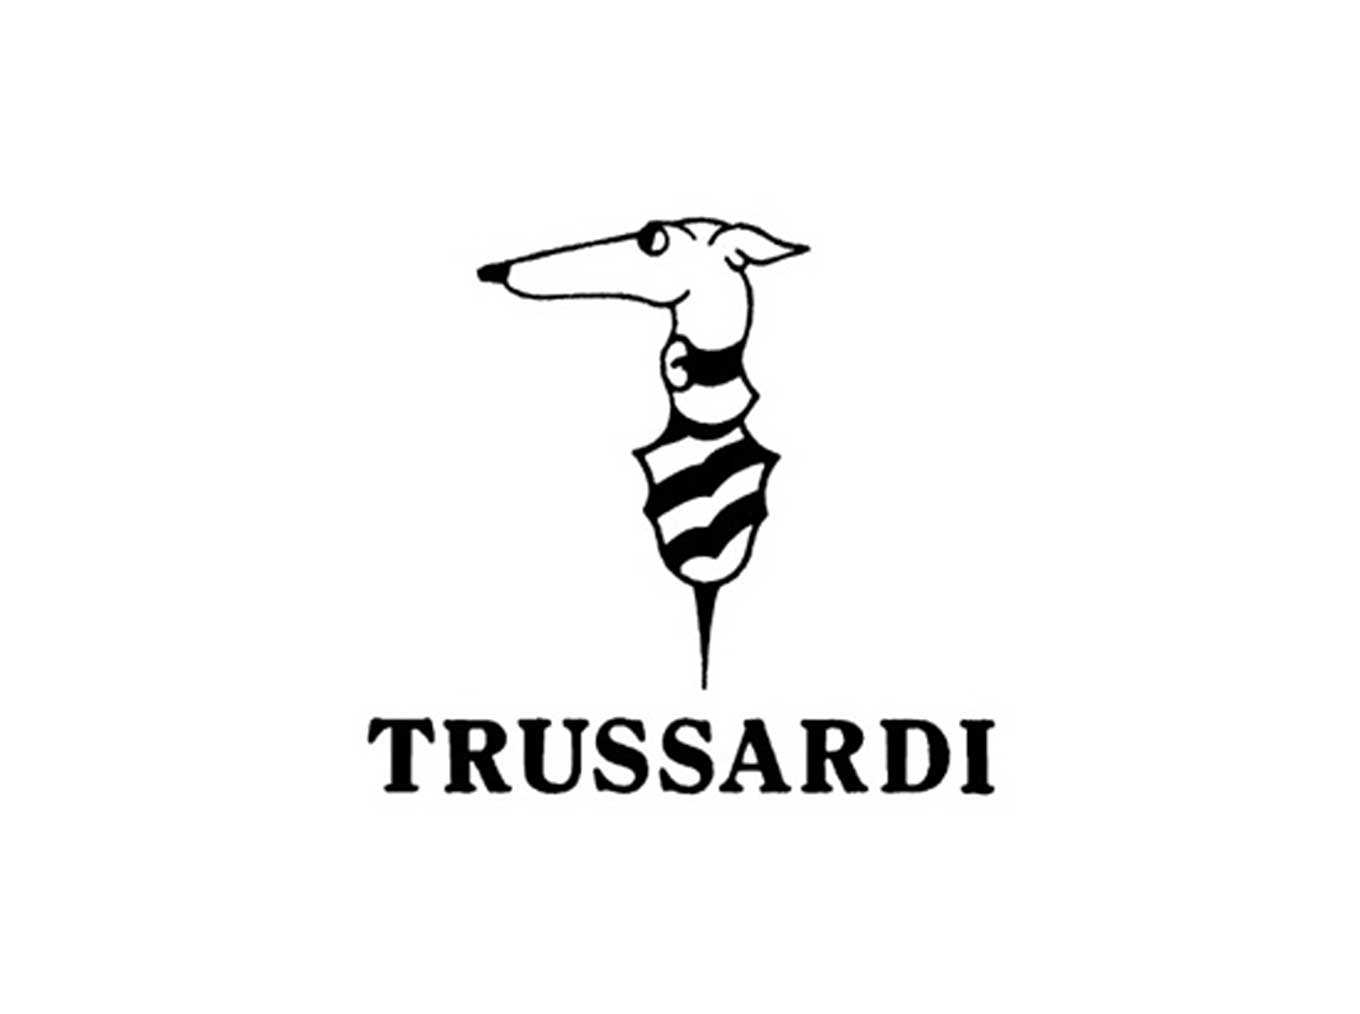 Труссарди логотип. Труссарди бренд одежды. Бренд Труссарди лого. Труссарди фирменный знак. Логотип Труссарди на одежде.